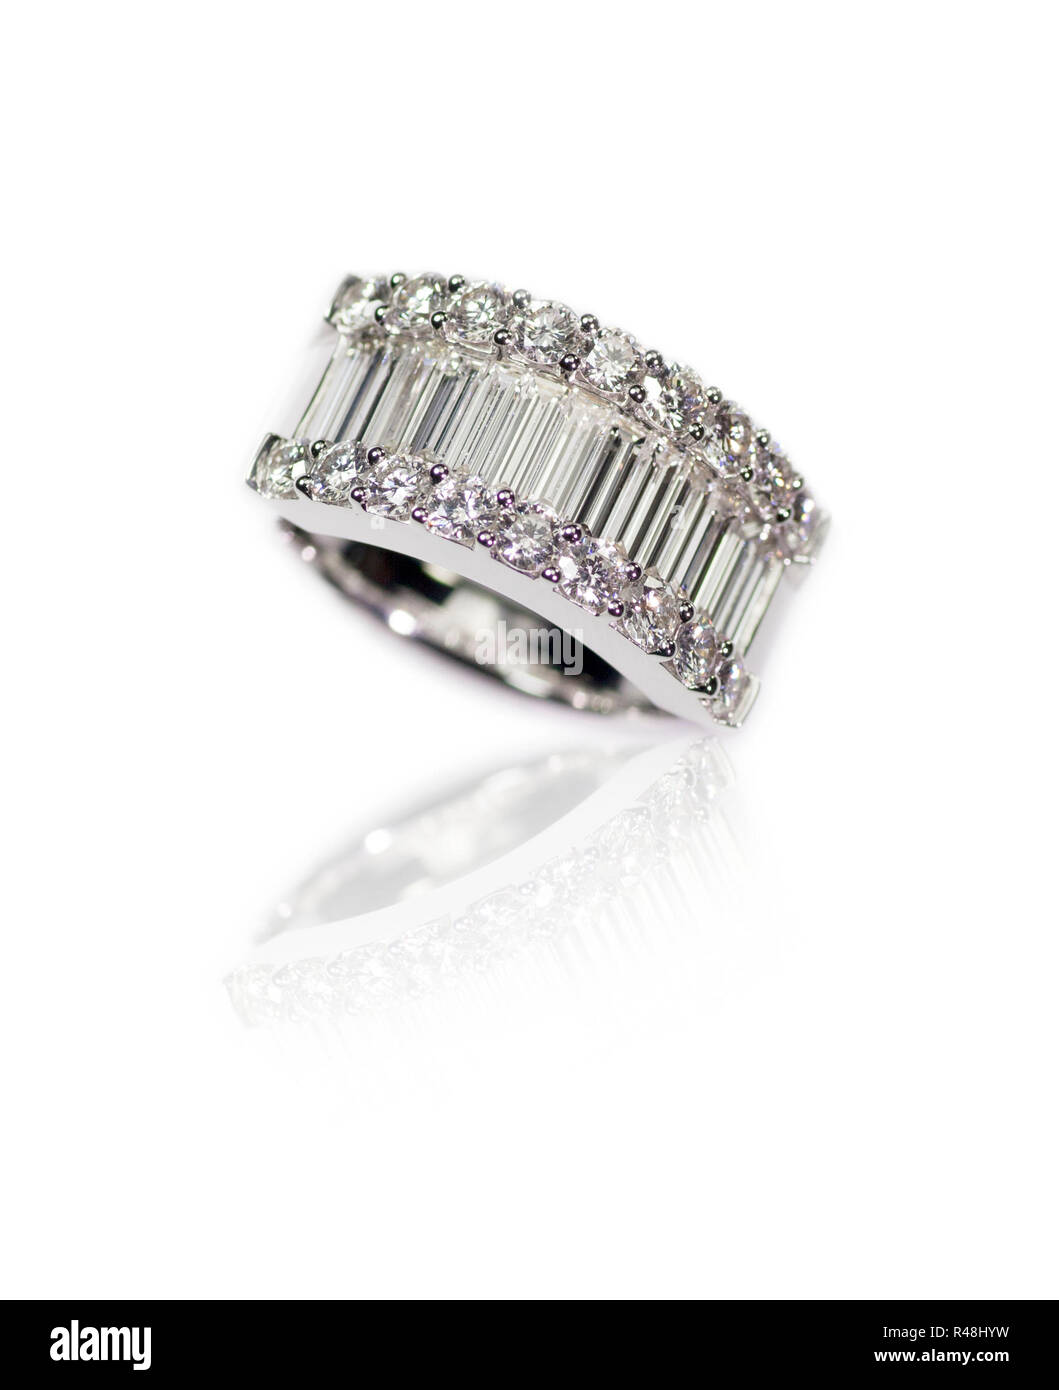 Diamond encrusted engagment wedding anniversary ring with Emerald Cut Diamonds Stock Photo